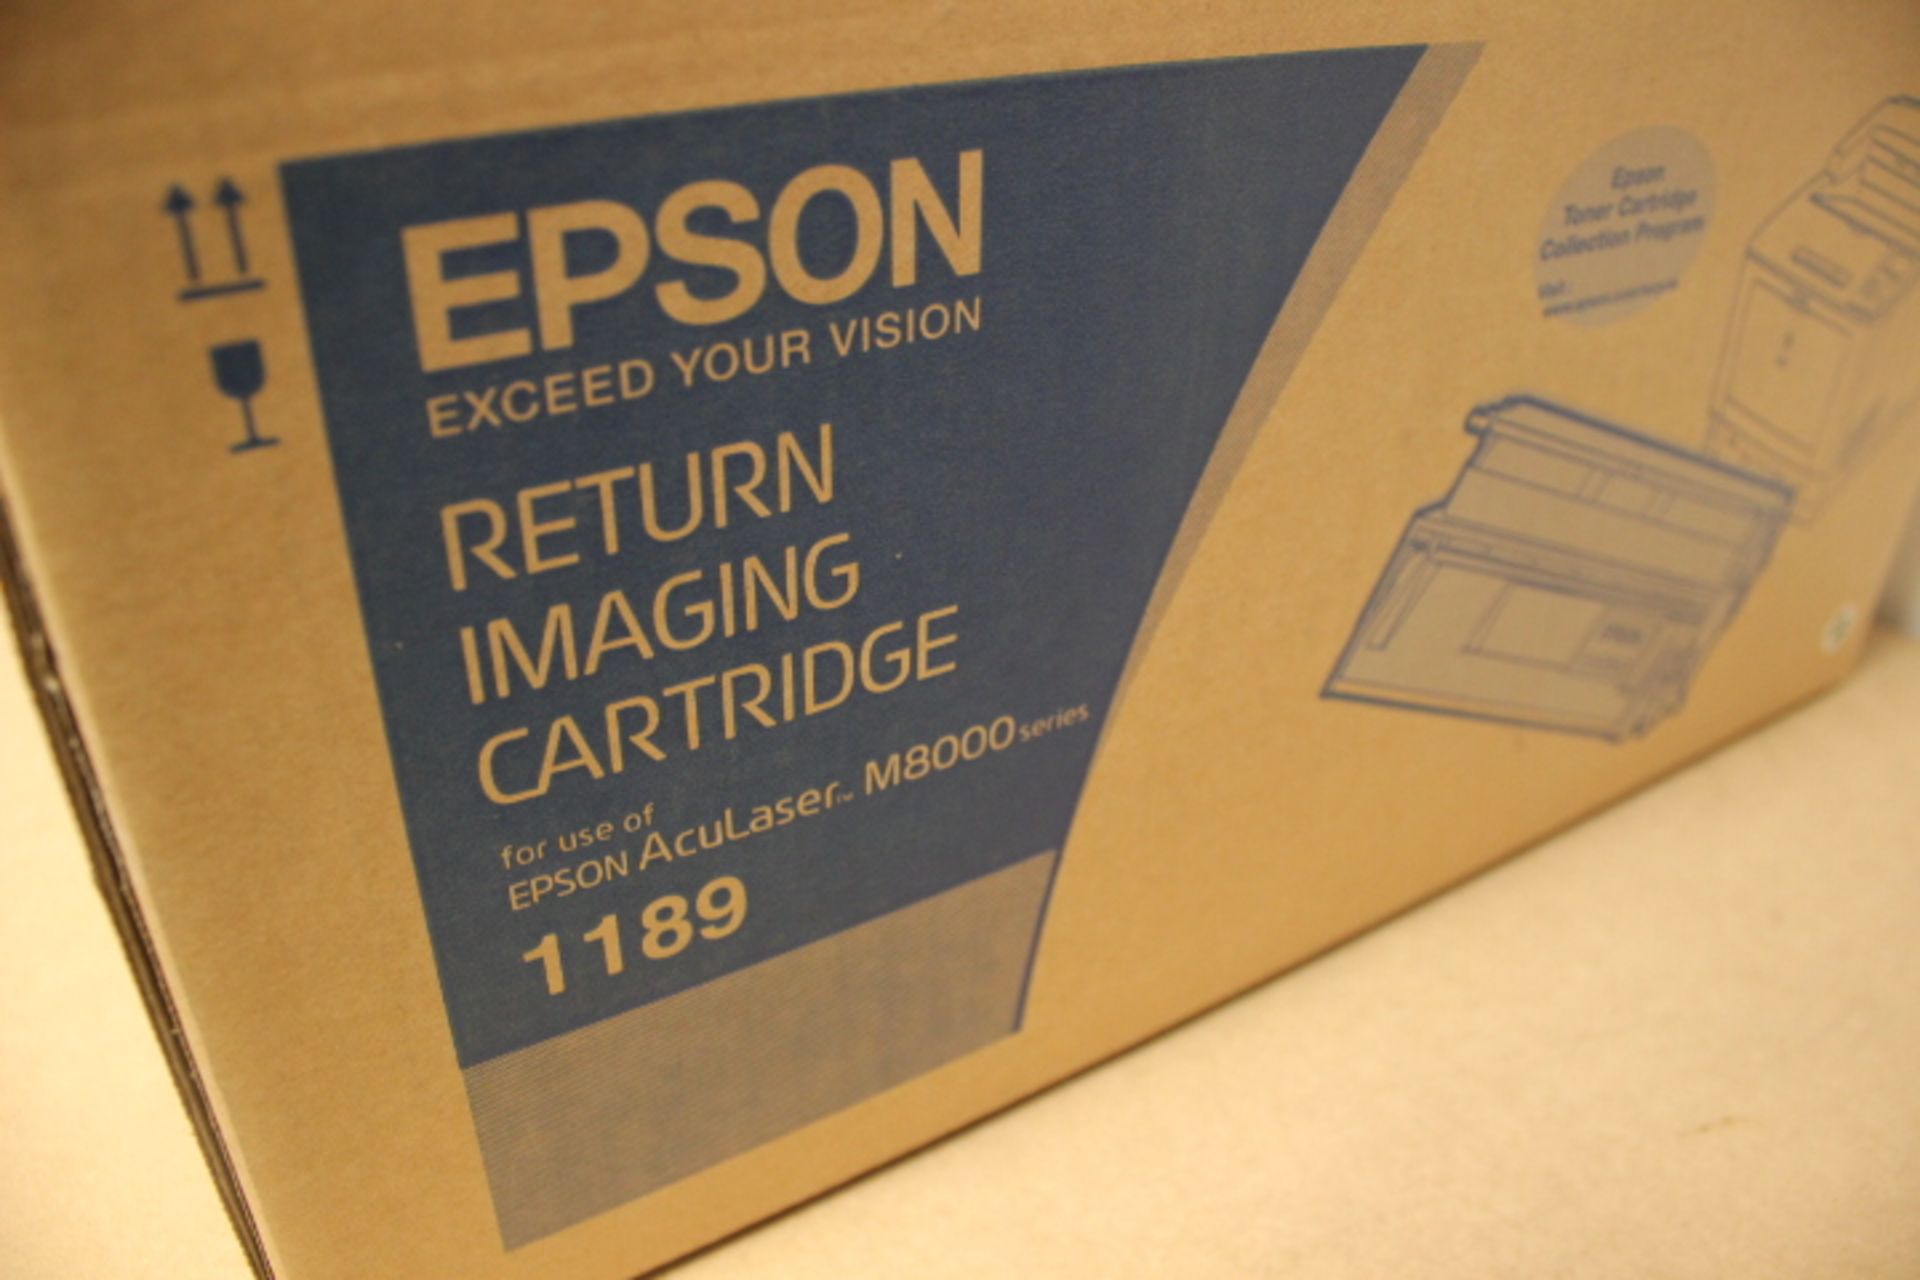 1x Epson Return Imaging Cartridge 1189Grade A - Image 2 of 2